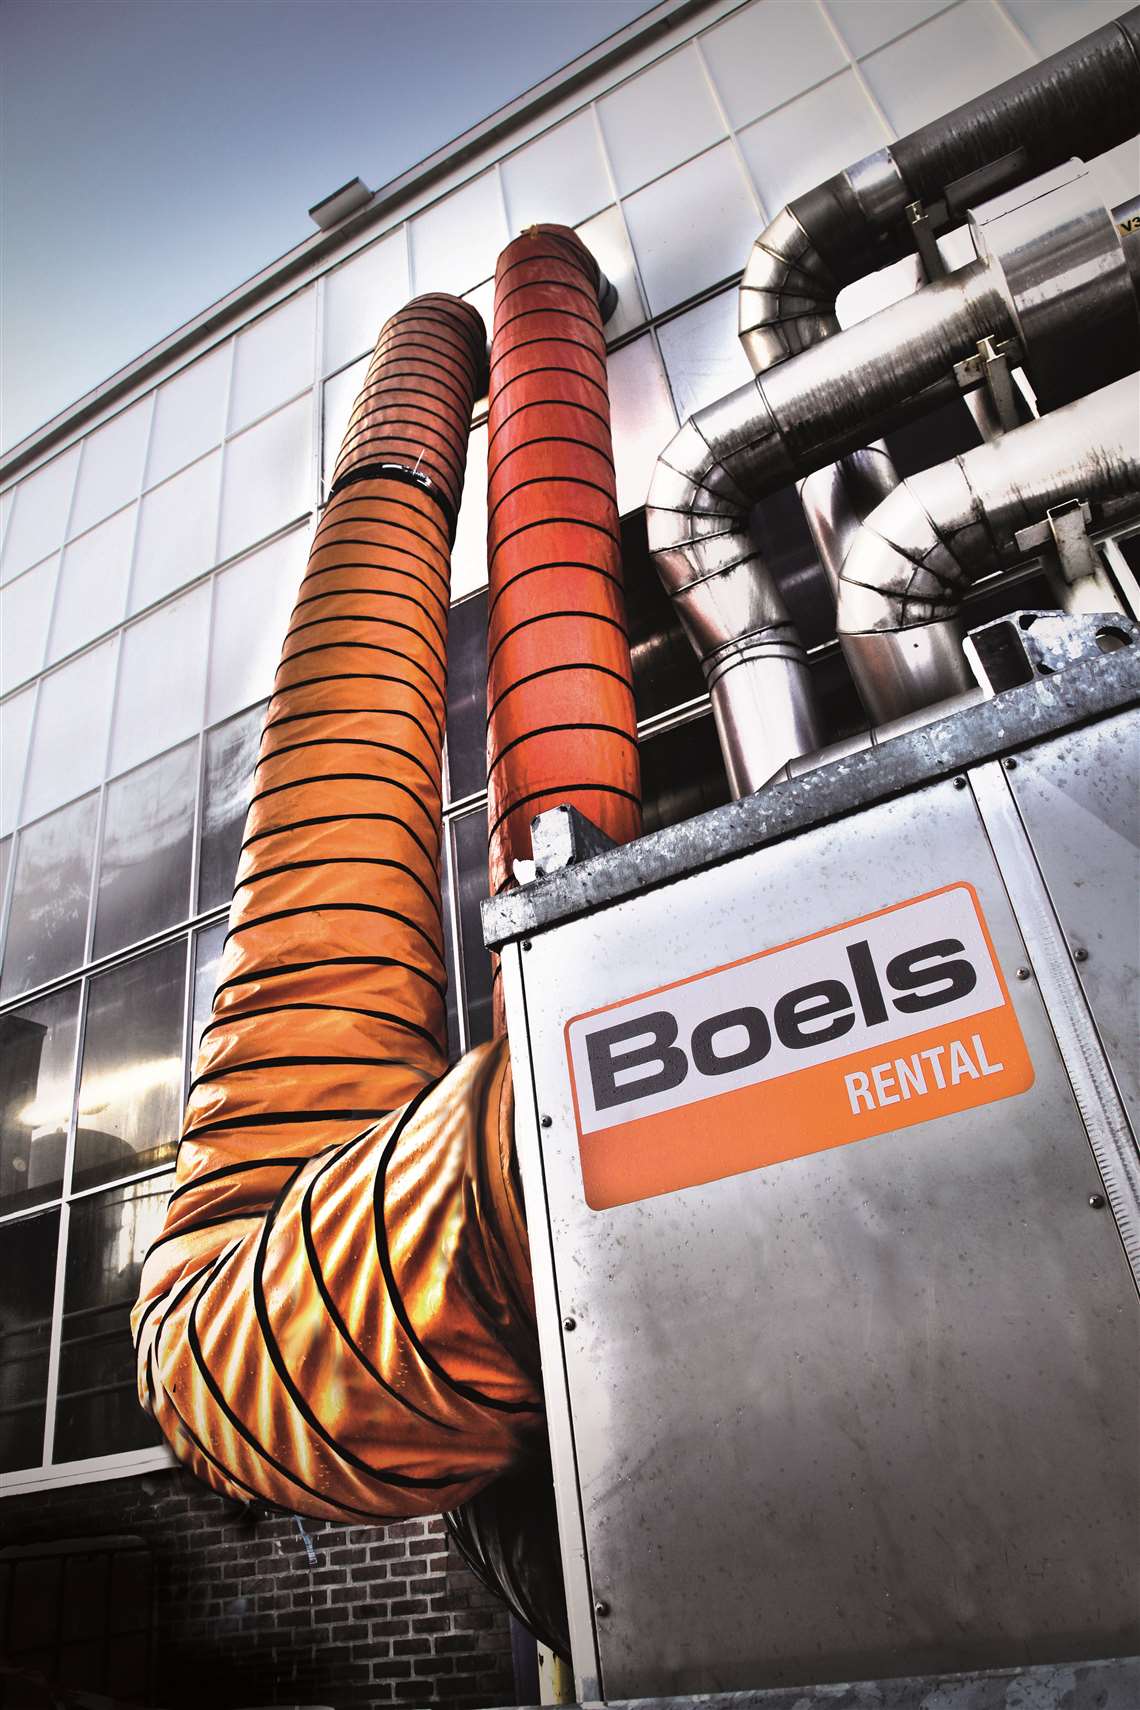 Boels' heat pump